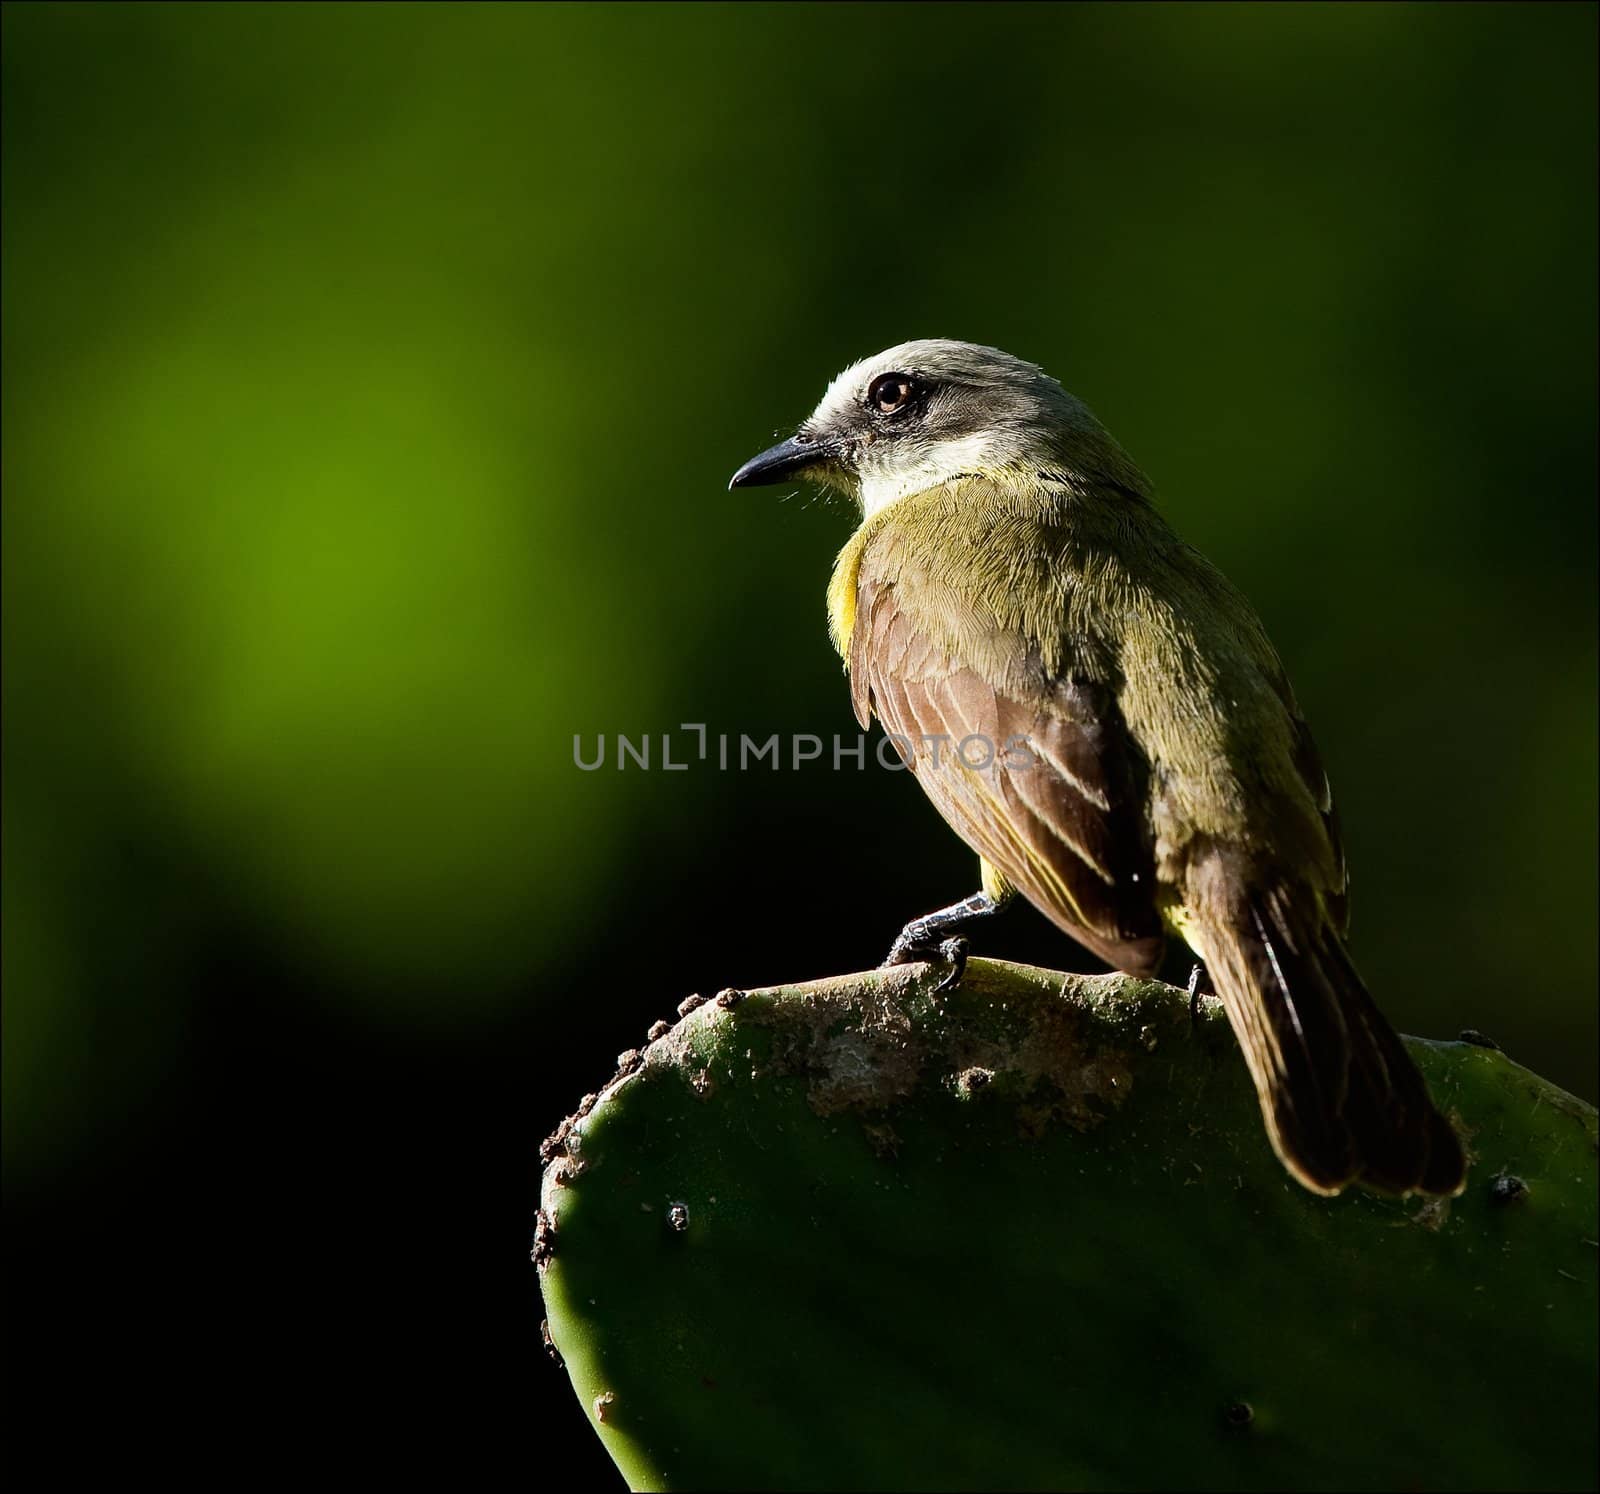 Bird on a cactus leaf. by SURZ